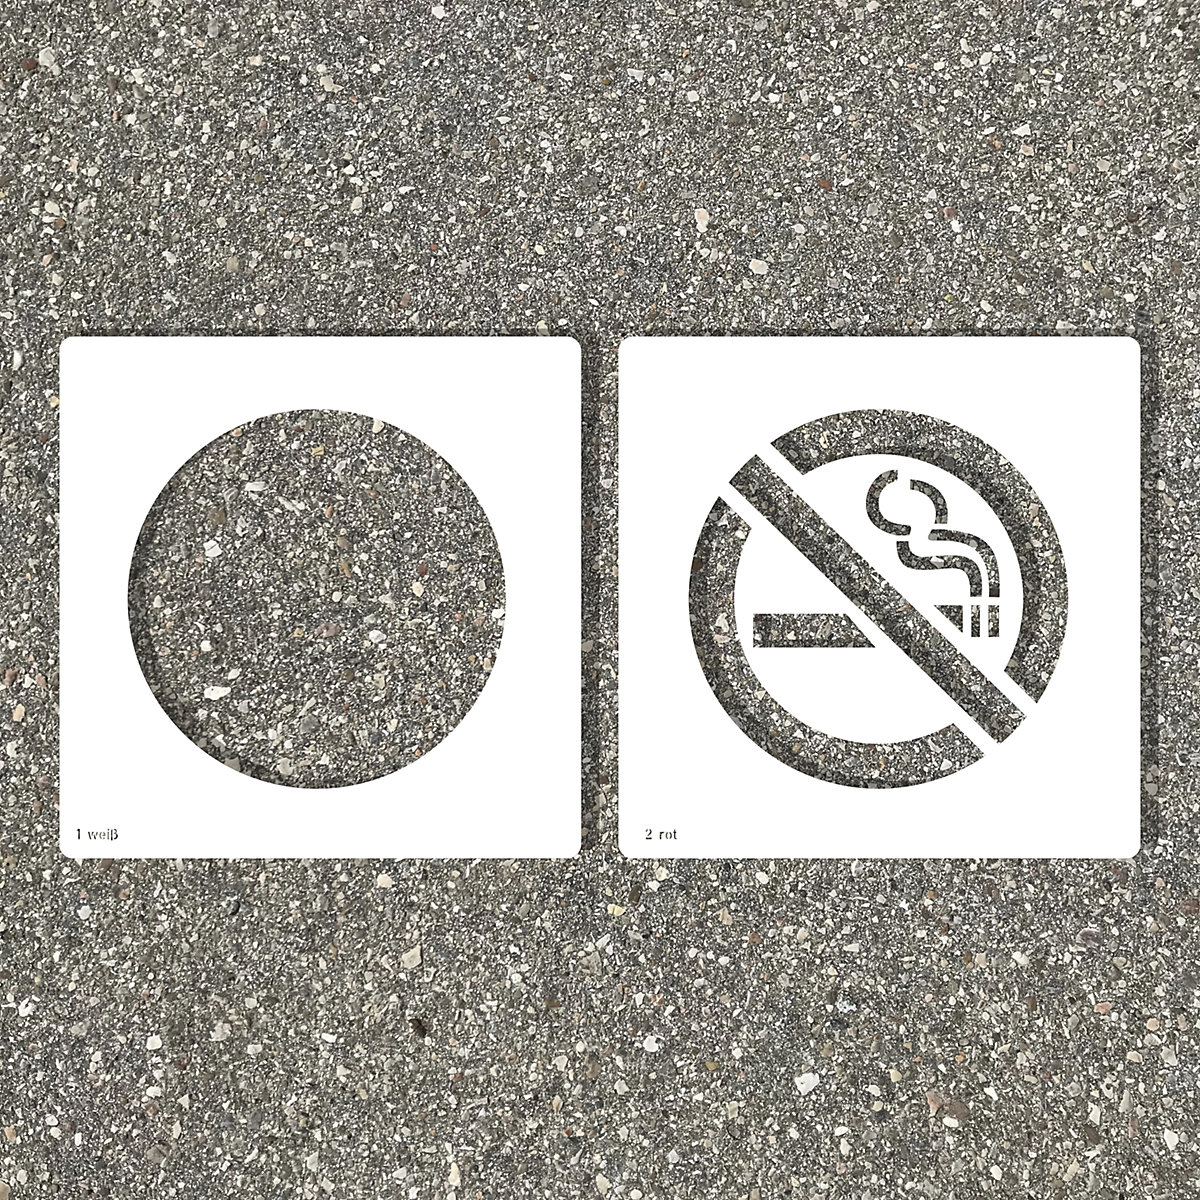 Gabarit de marquage des sols, interdiction de fumer, plastique